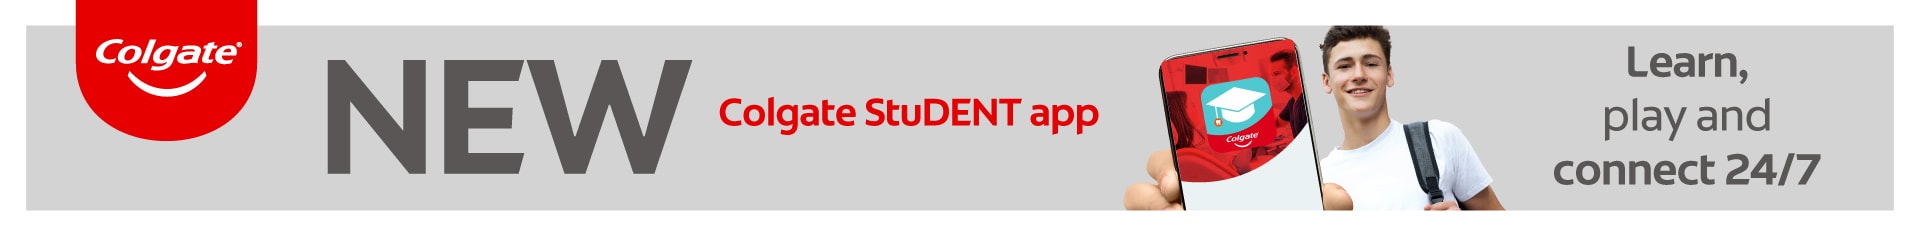 Colgate Students App Banner